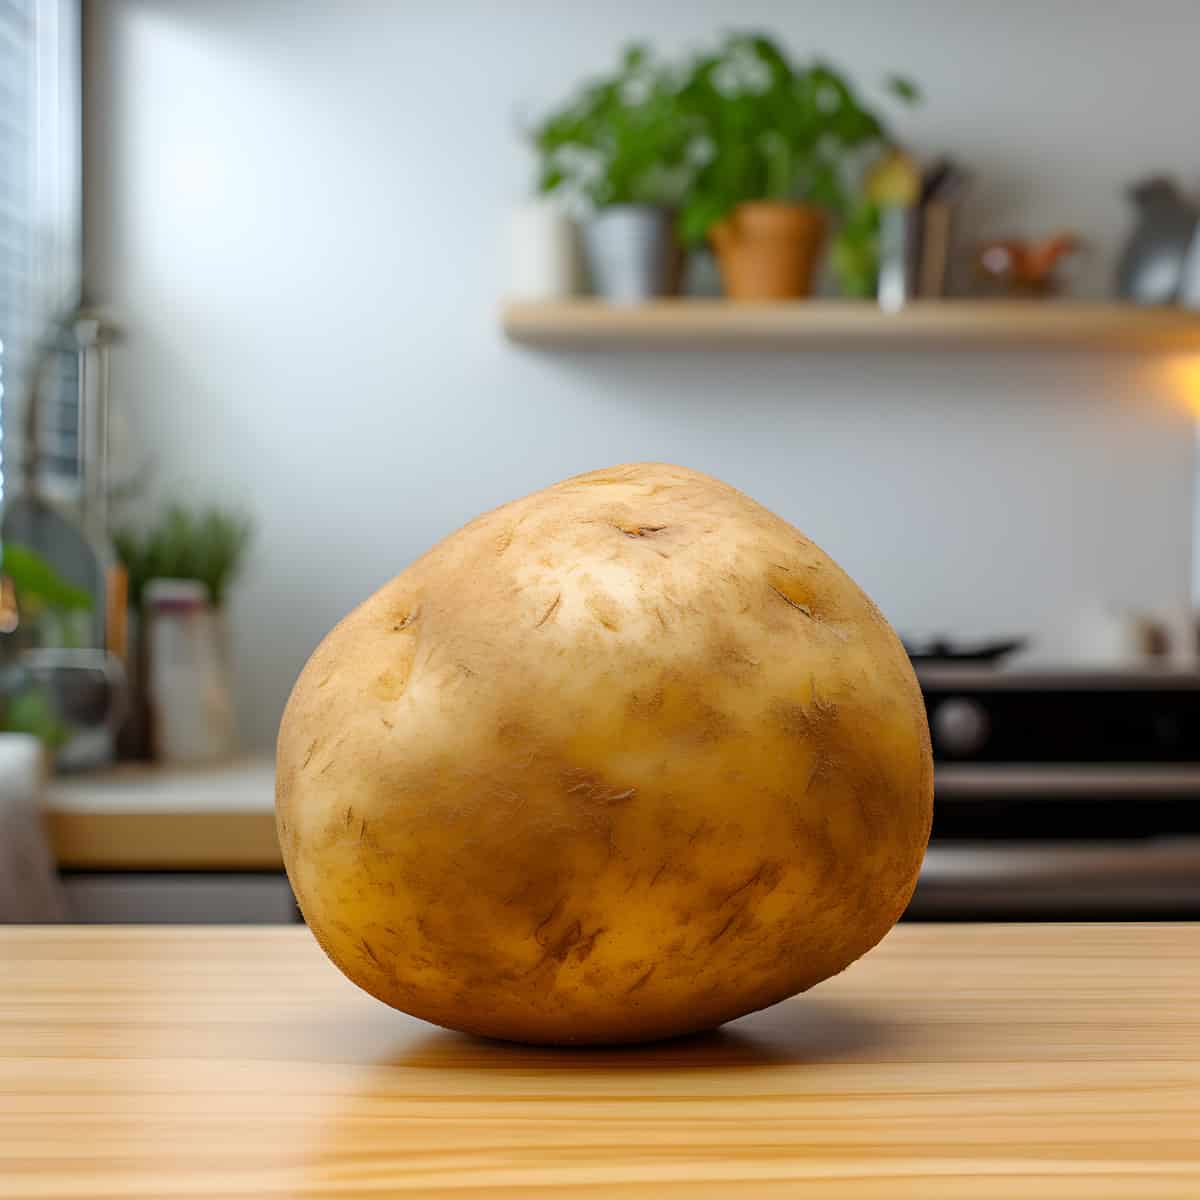 Sirco Potatoes on a kitchen counter